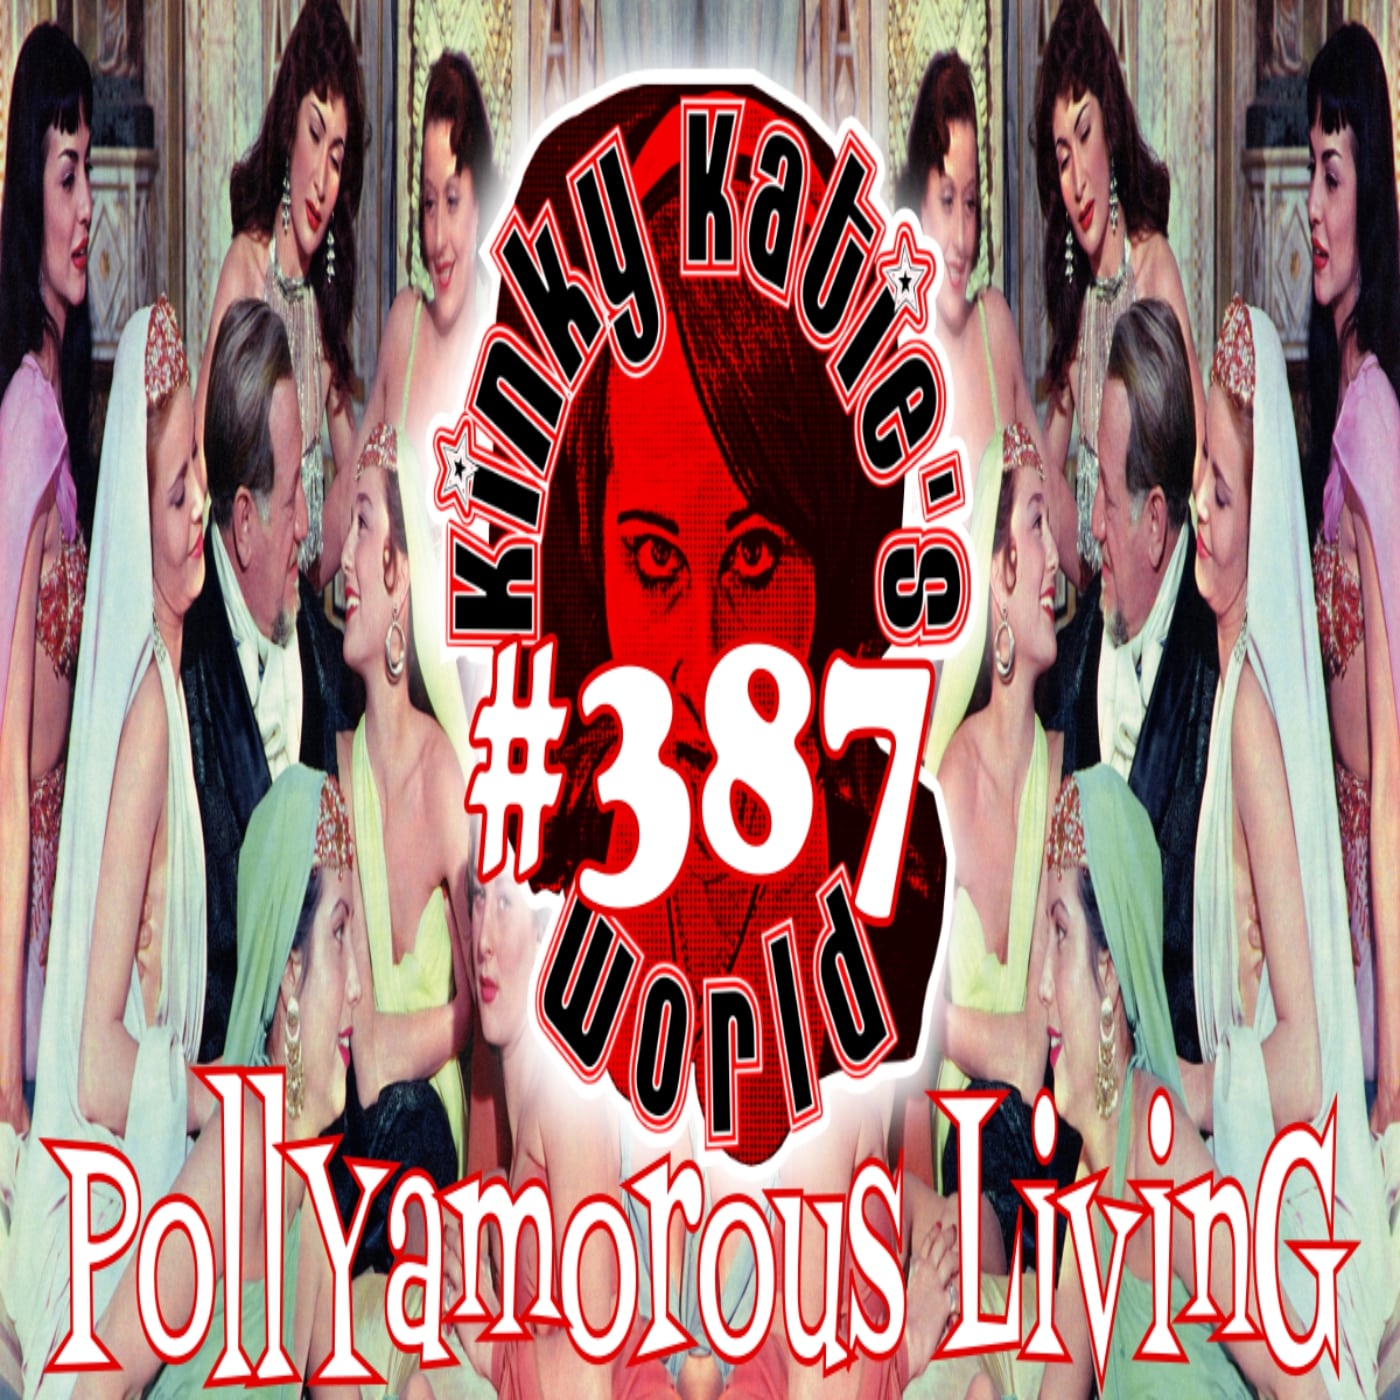 #387 – Pollyamorous Living